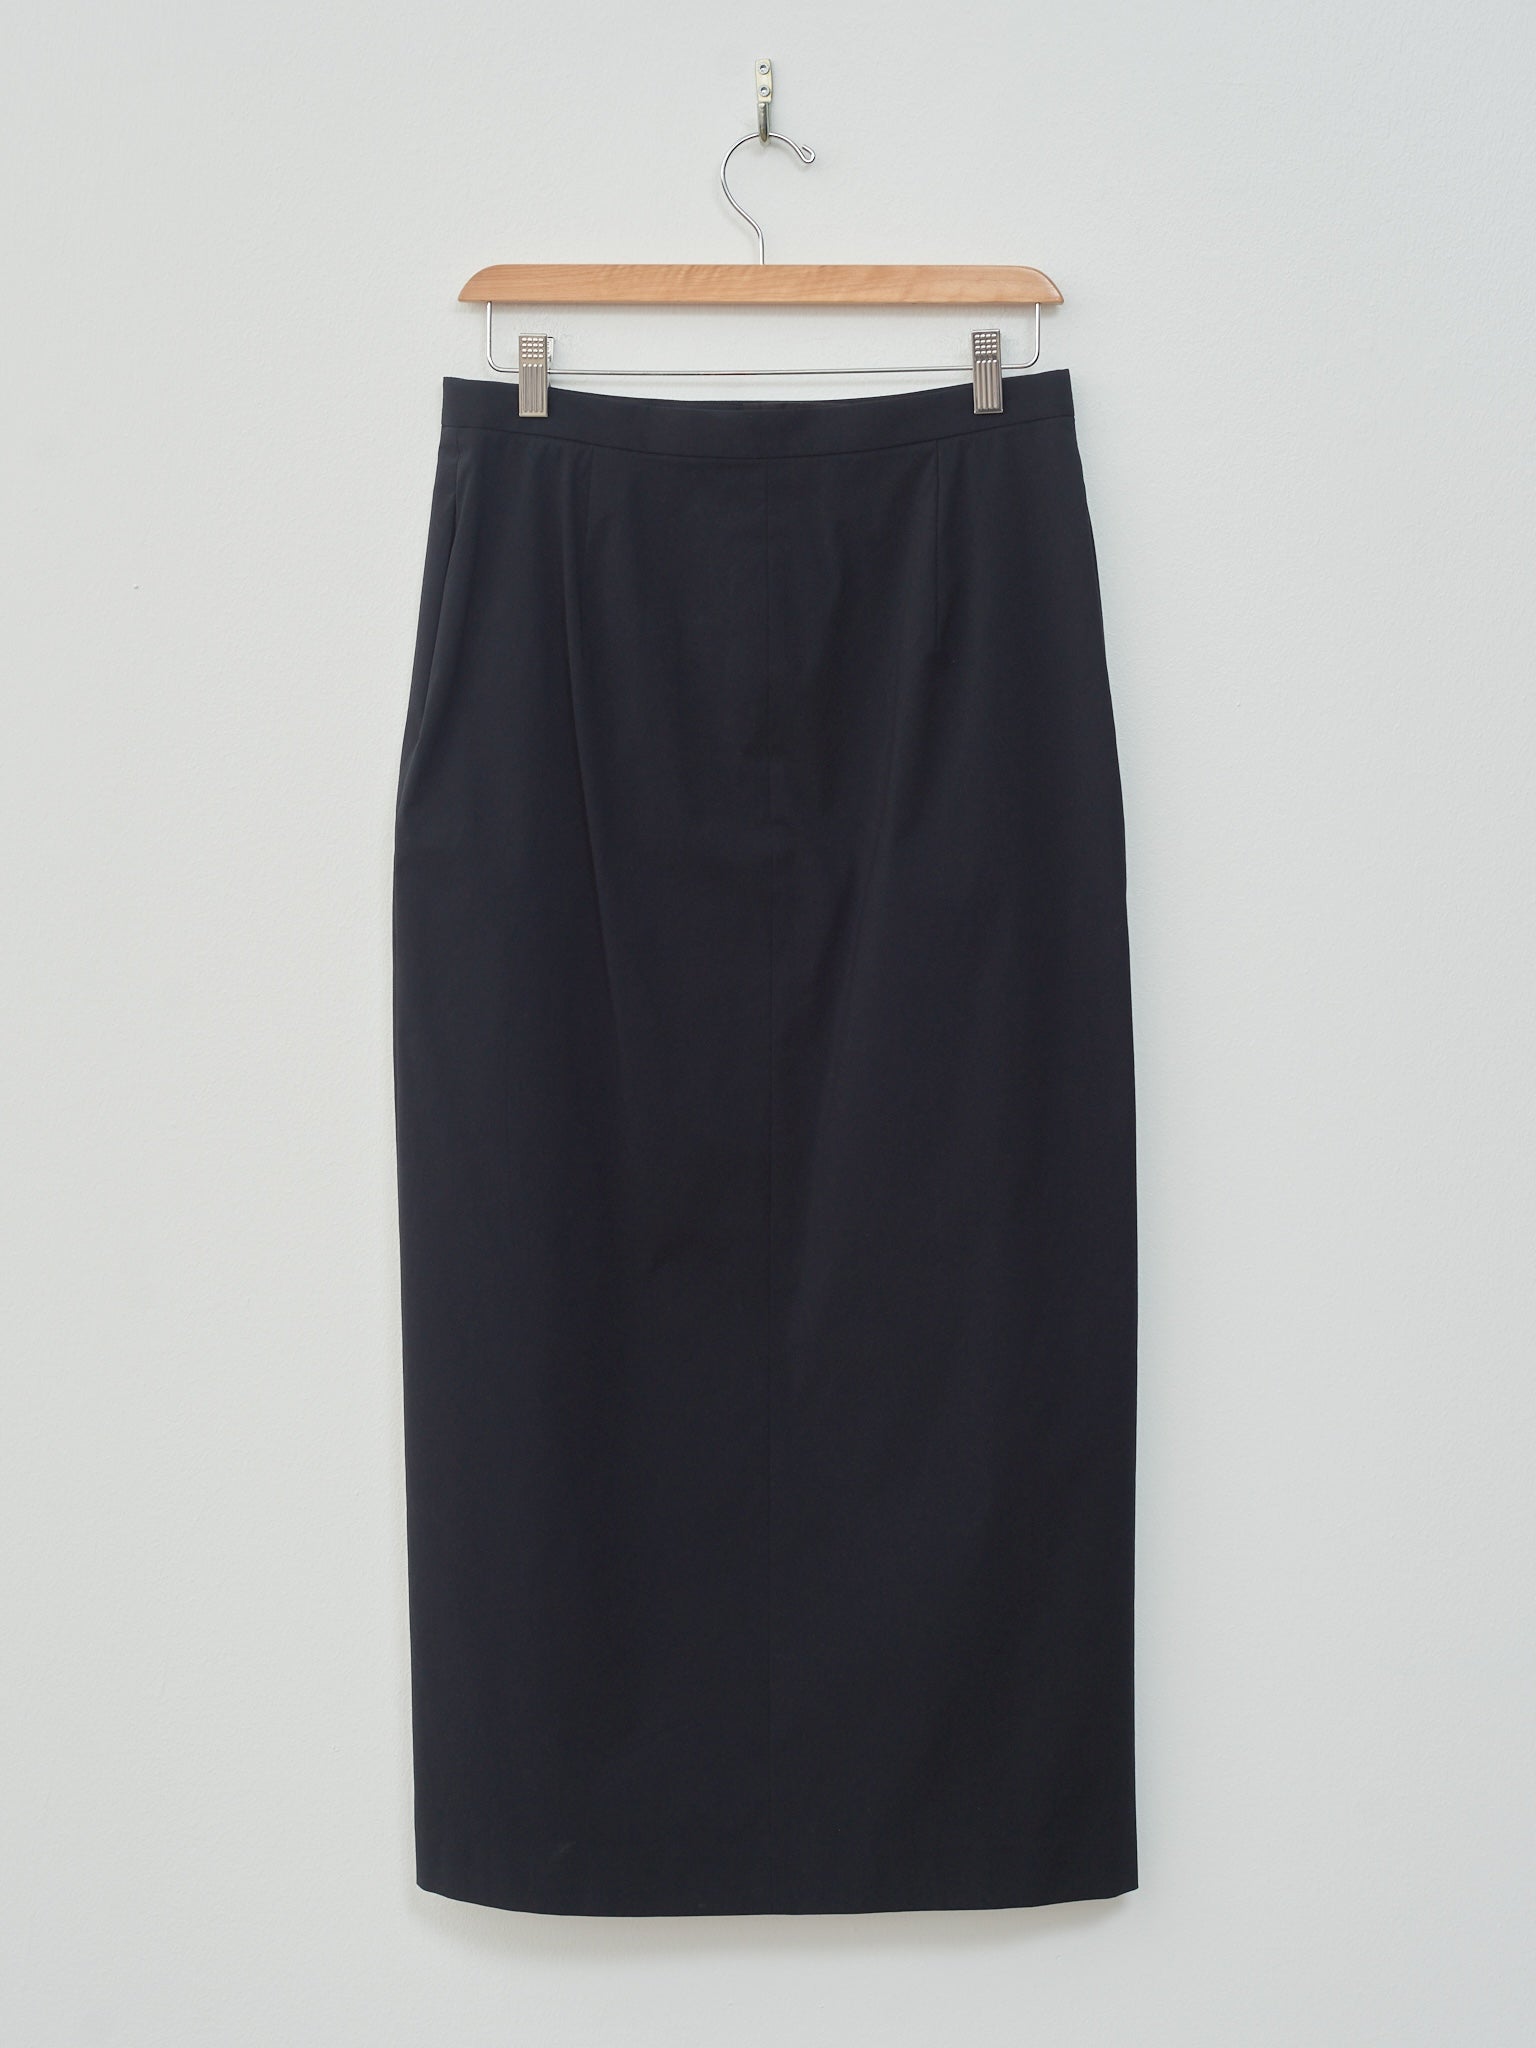 Namu Shop - Yleve Cotton Nylon Stretch Weather Skirt - Black